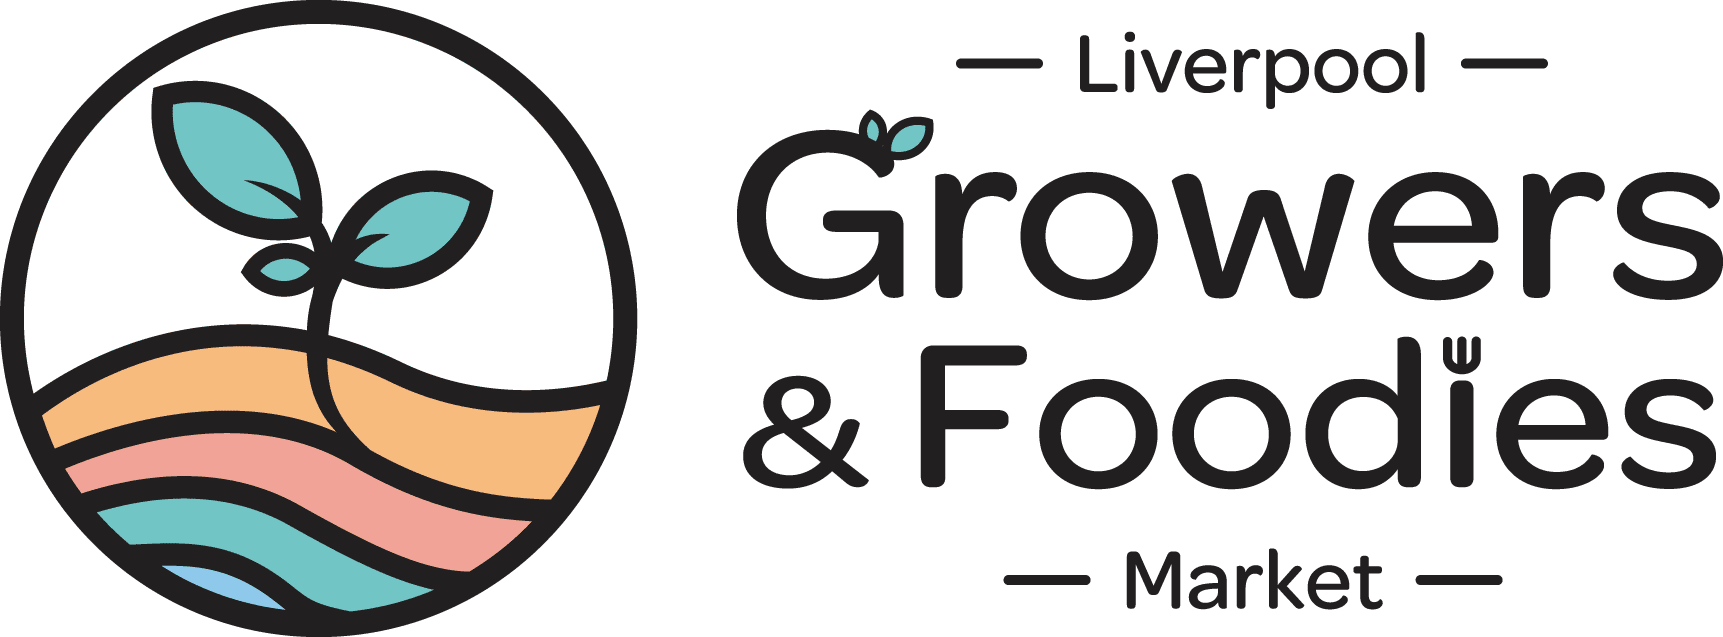 Liverpool Growers & Foodies Market